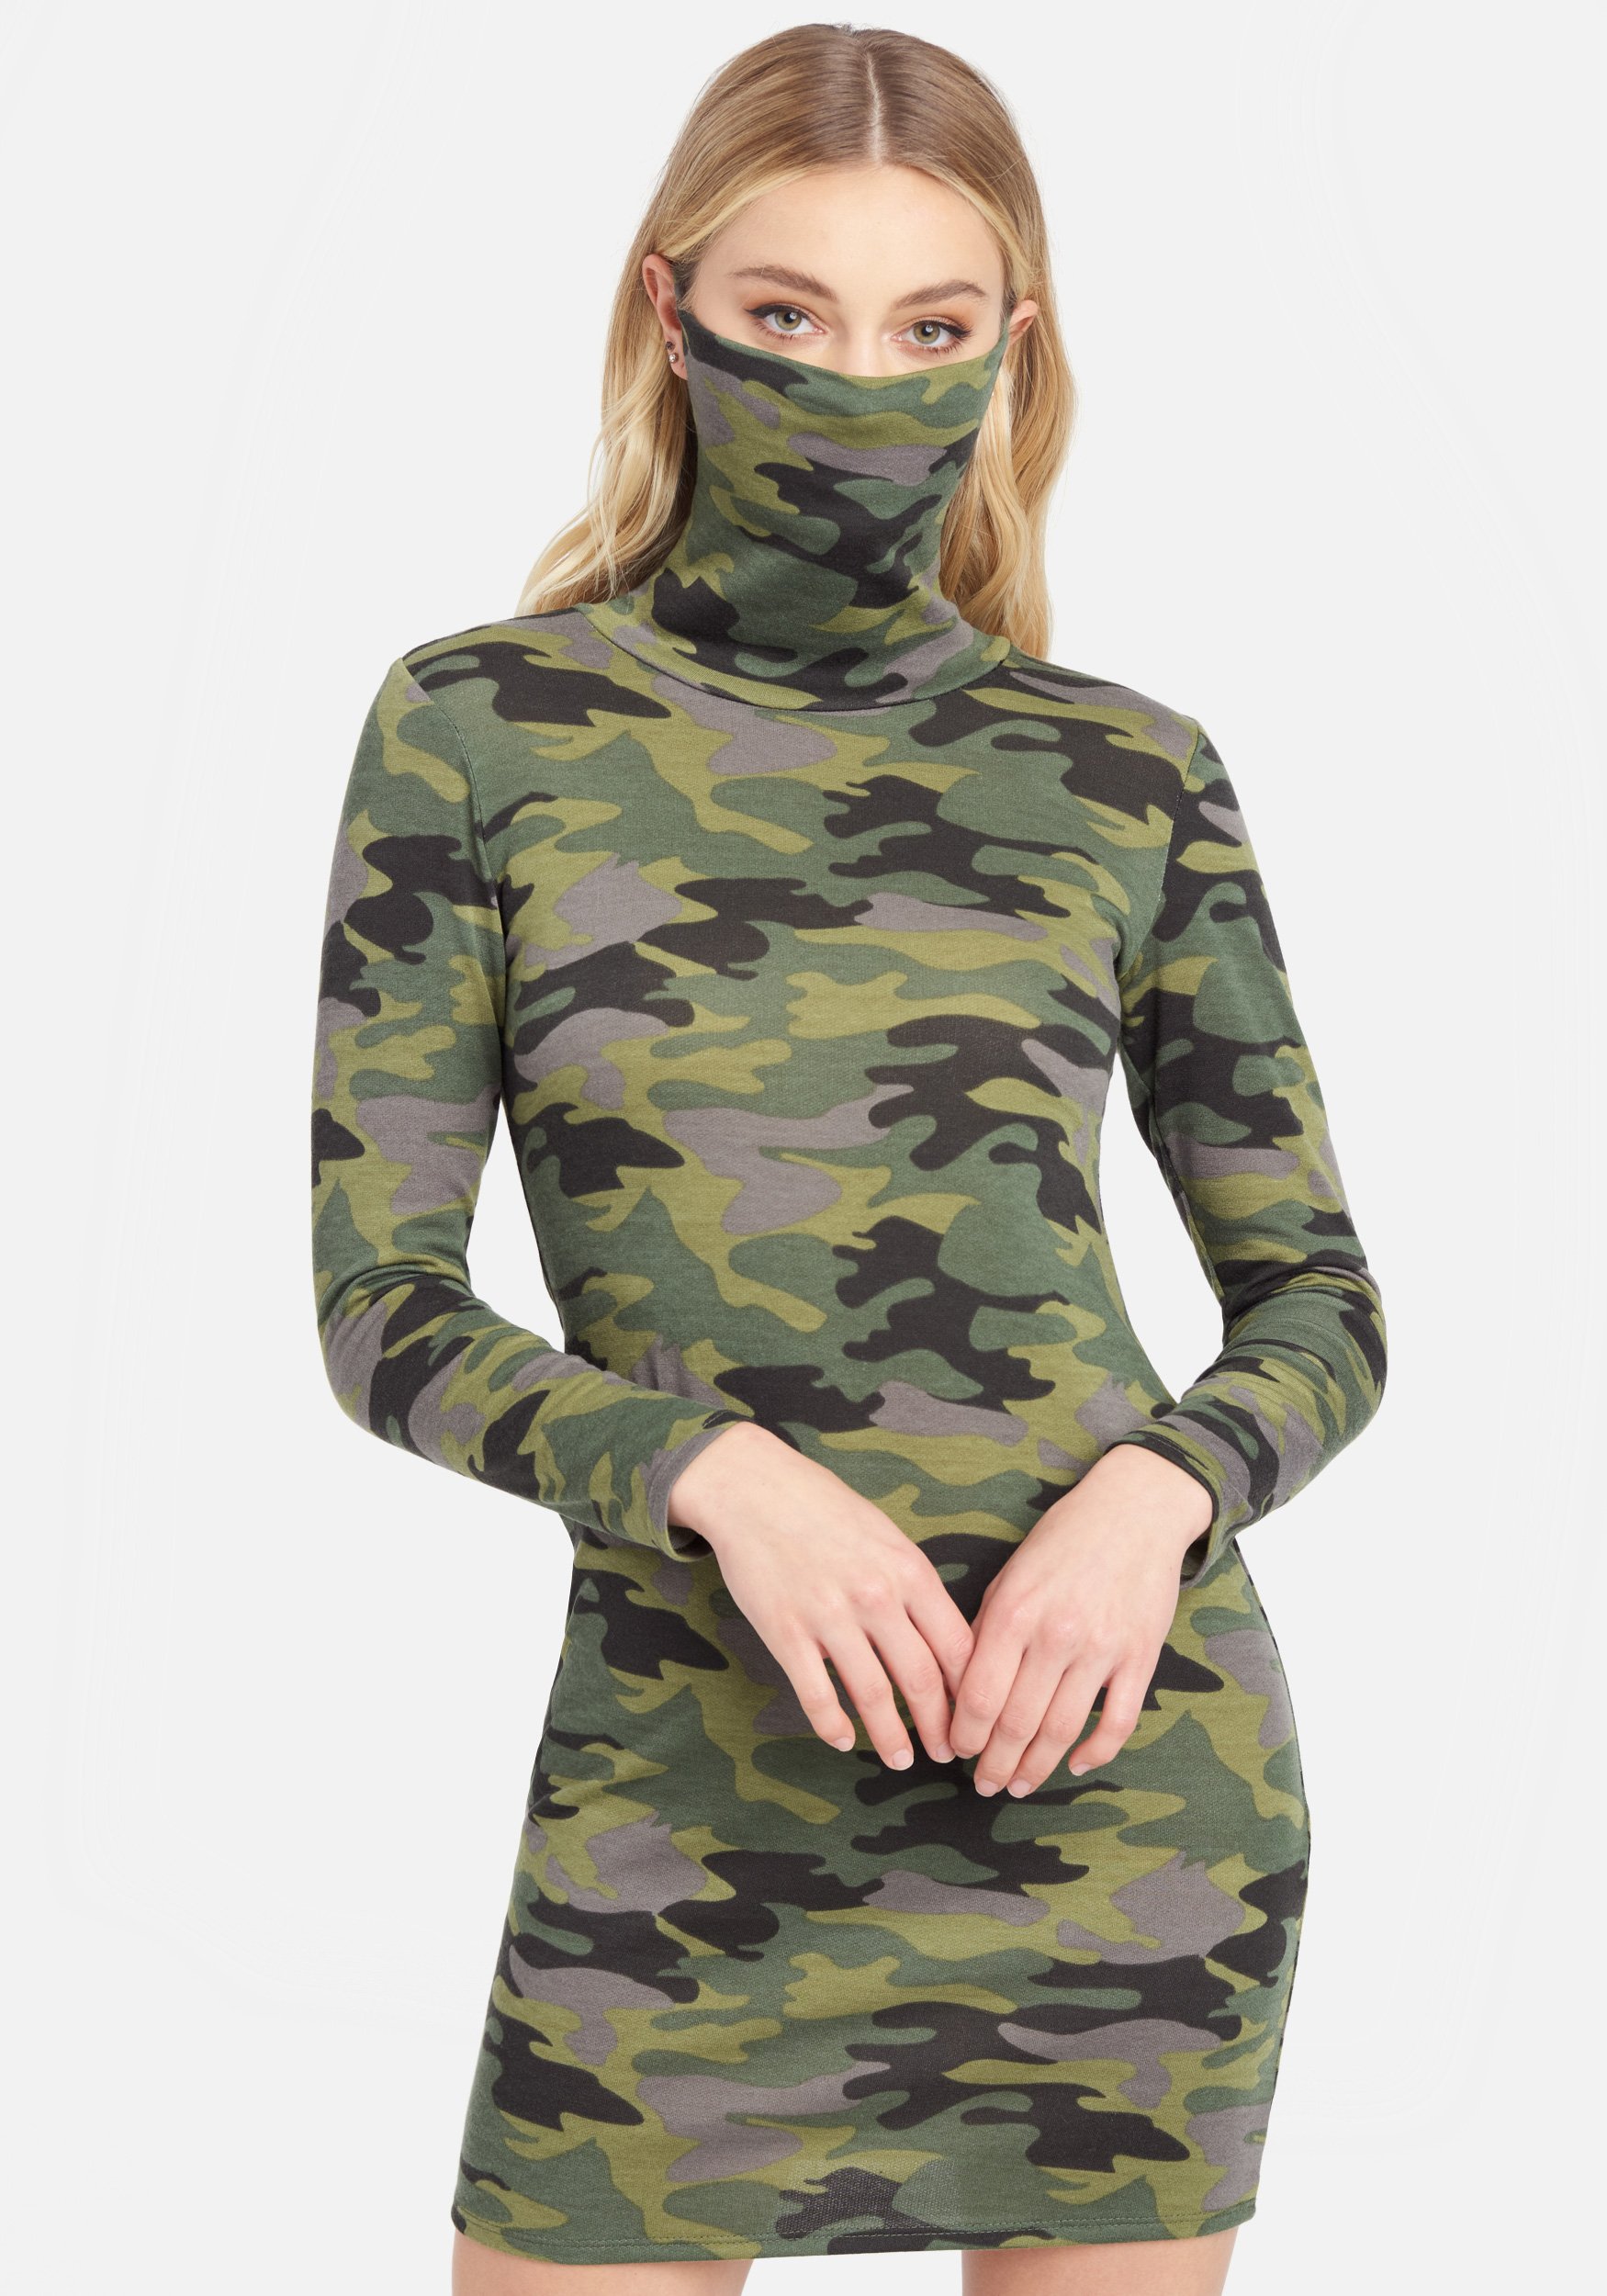 Bebe Women's Camo Long Sleeve Mask/Mock Neck Dress, Size XS in Camouflage Viscose